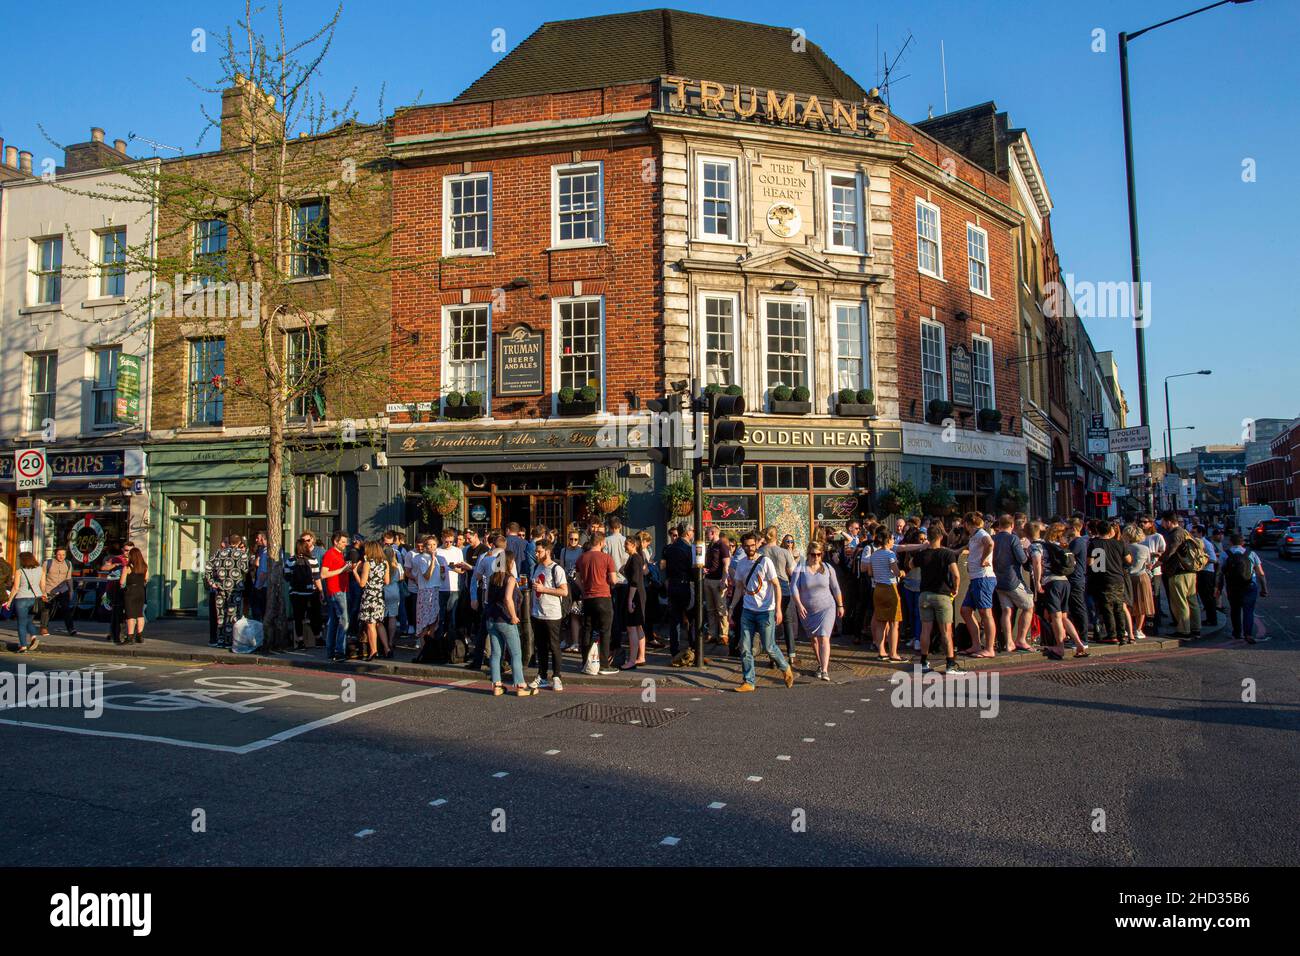 Peopel drinking outside The Golden Heart Pub on Commercial Street in Spitalfields, London Stock Photo